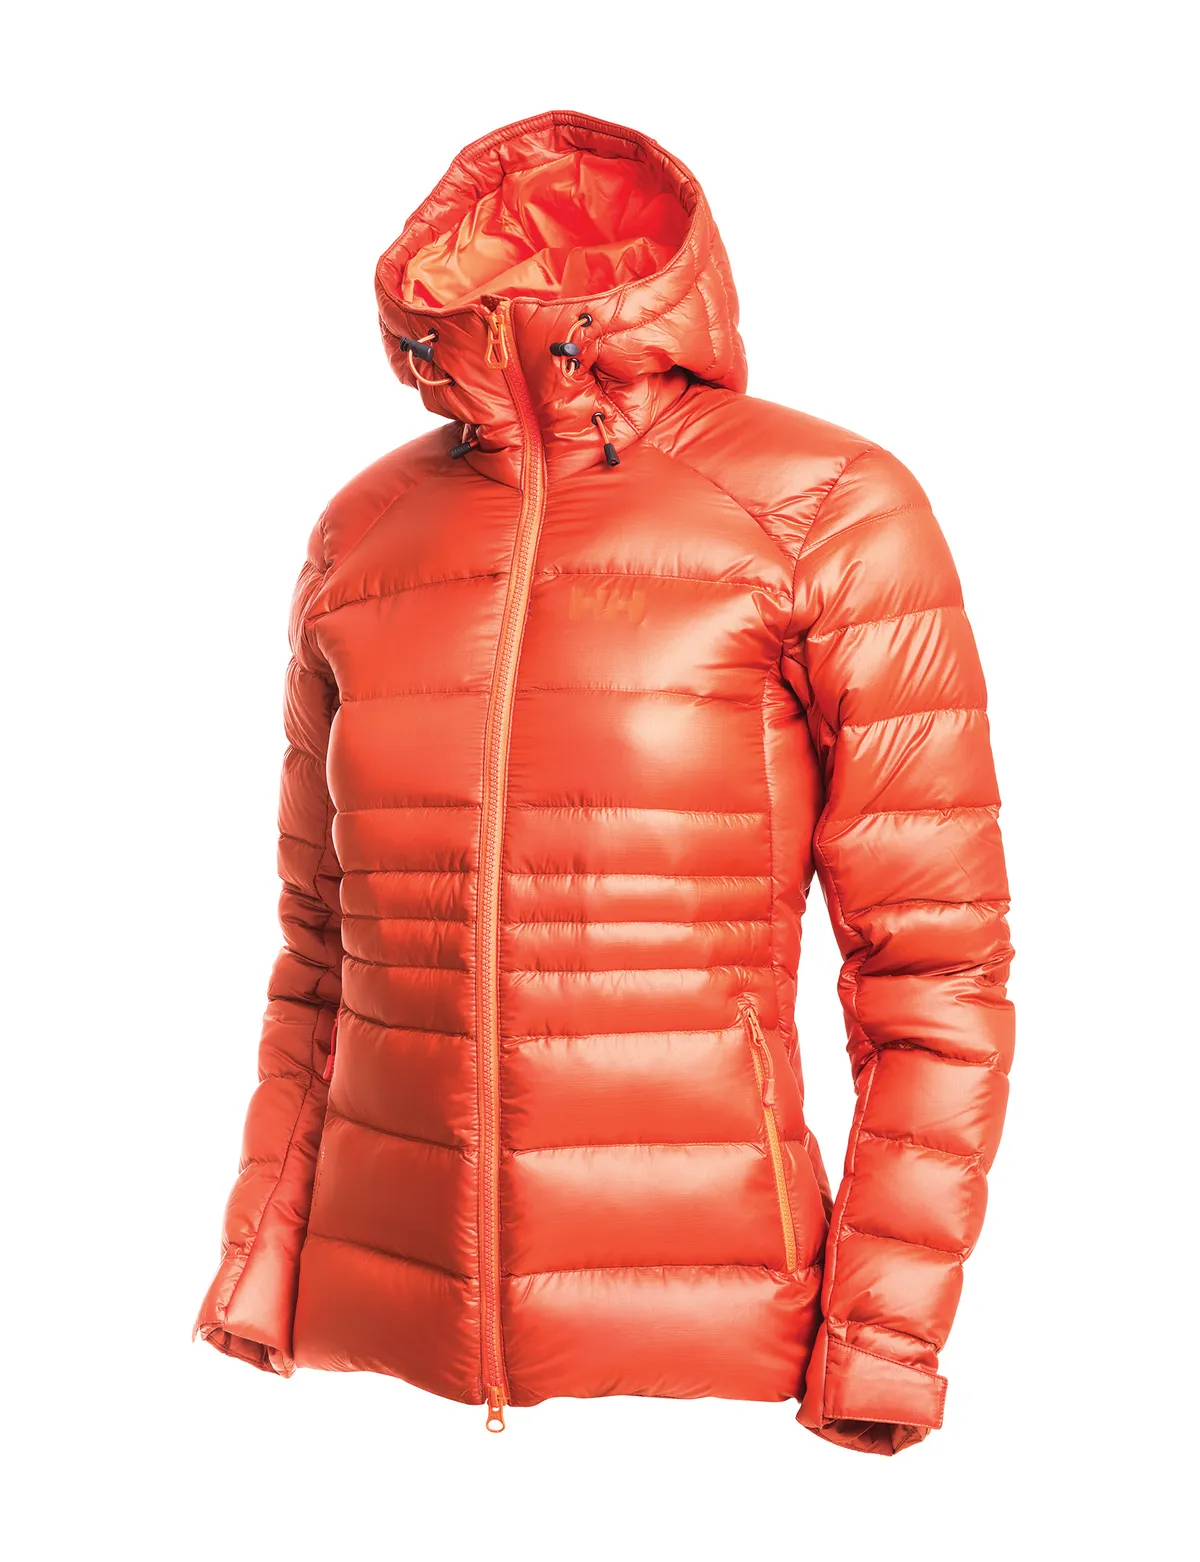 Helly Hansen Vanir Icefall jacket